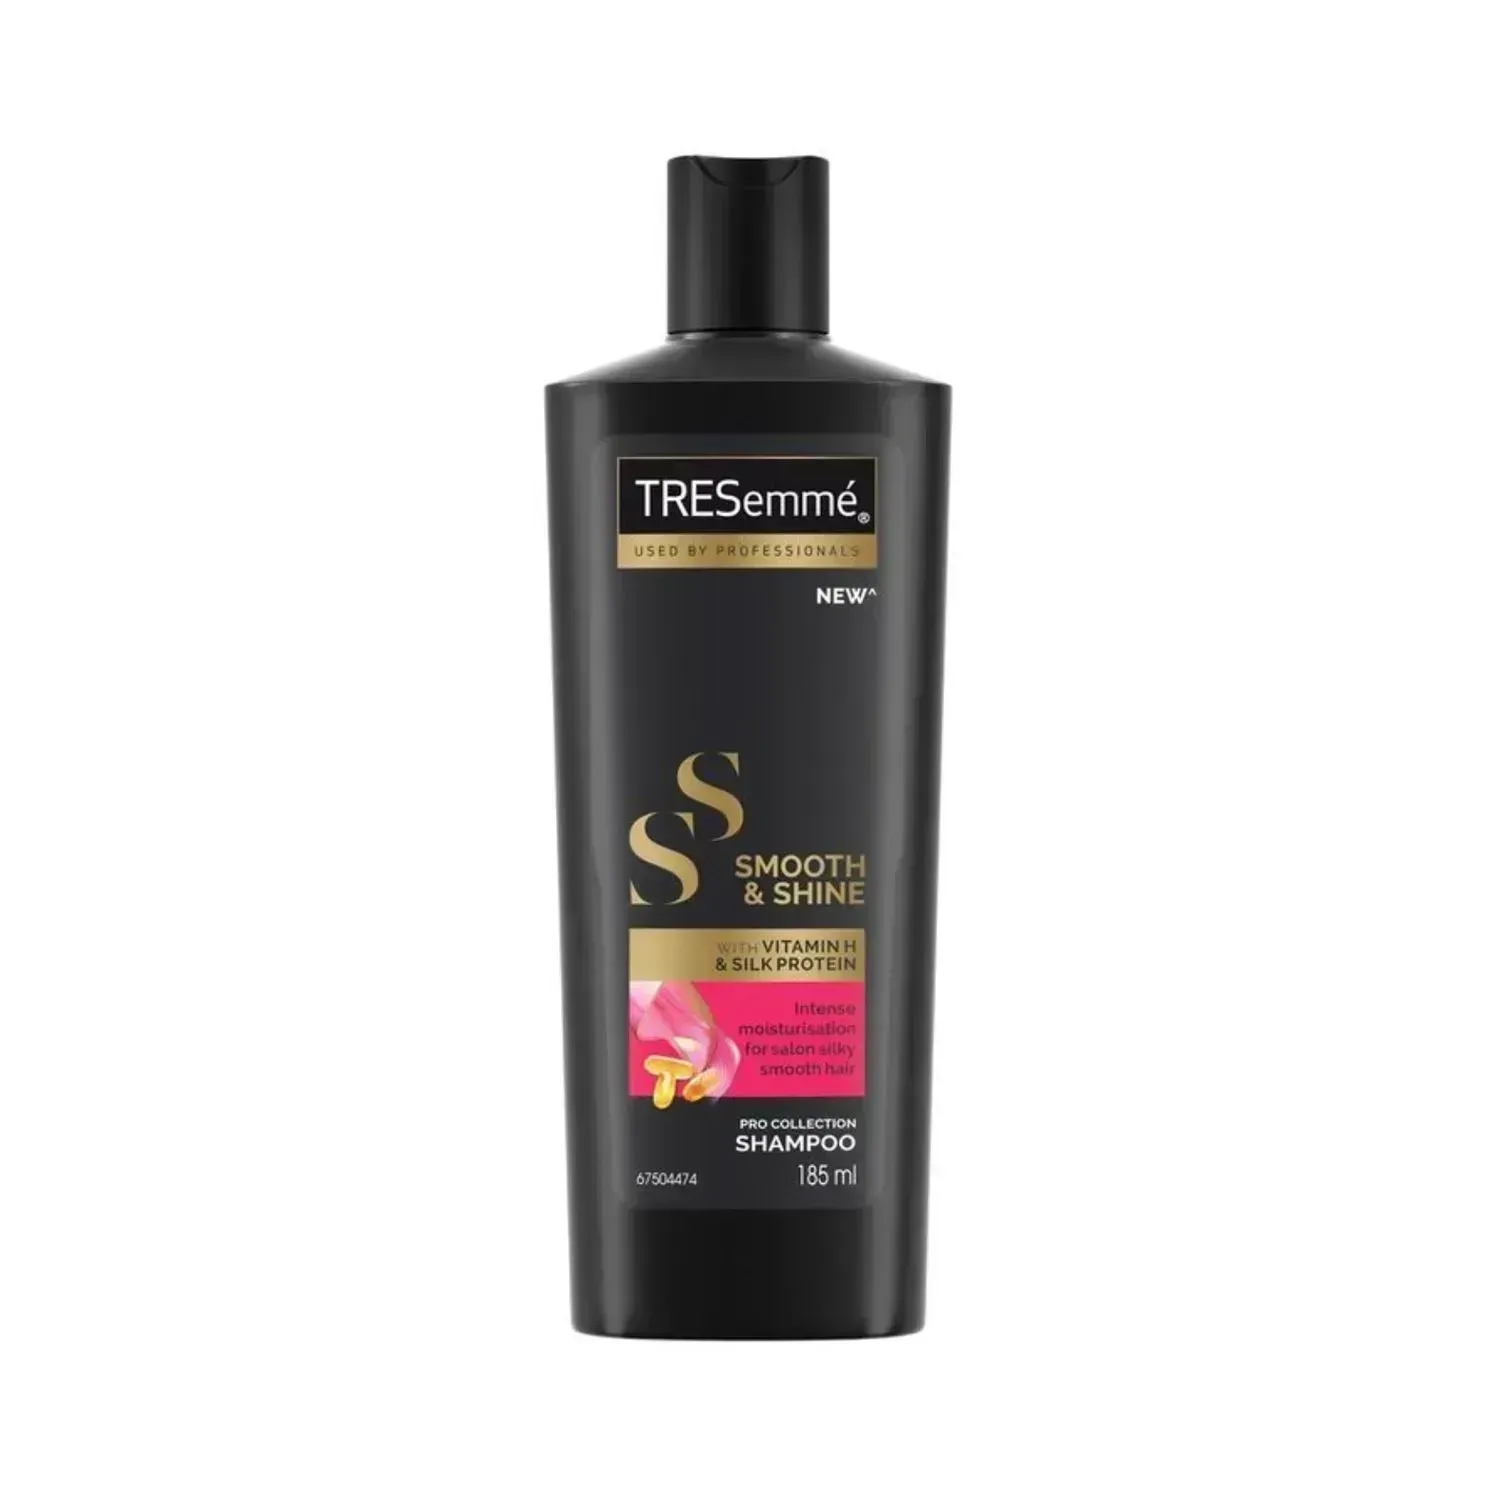 Tresemme Smooth & Shine Shampoo - (185ml)